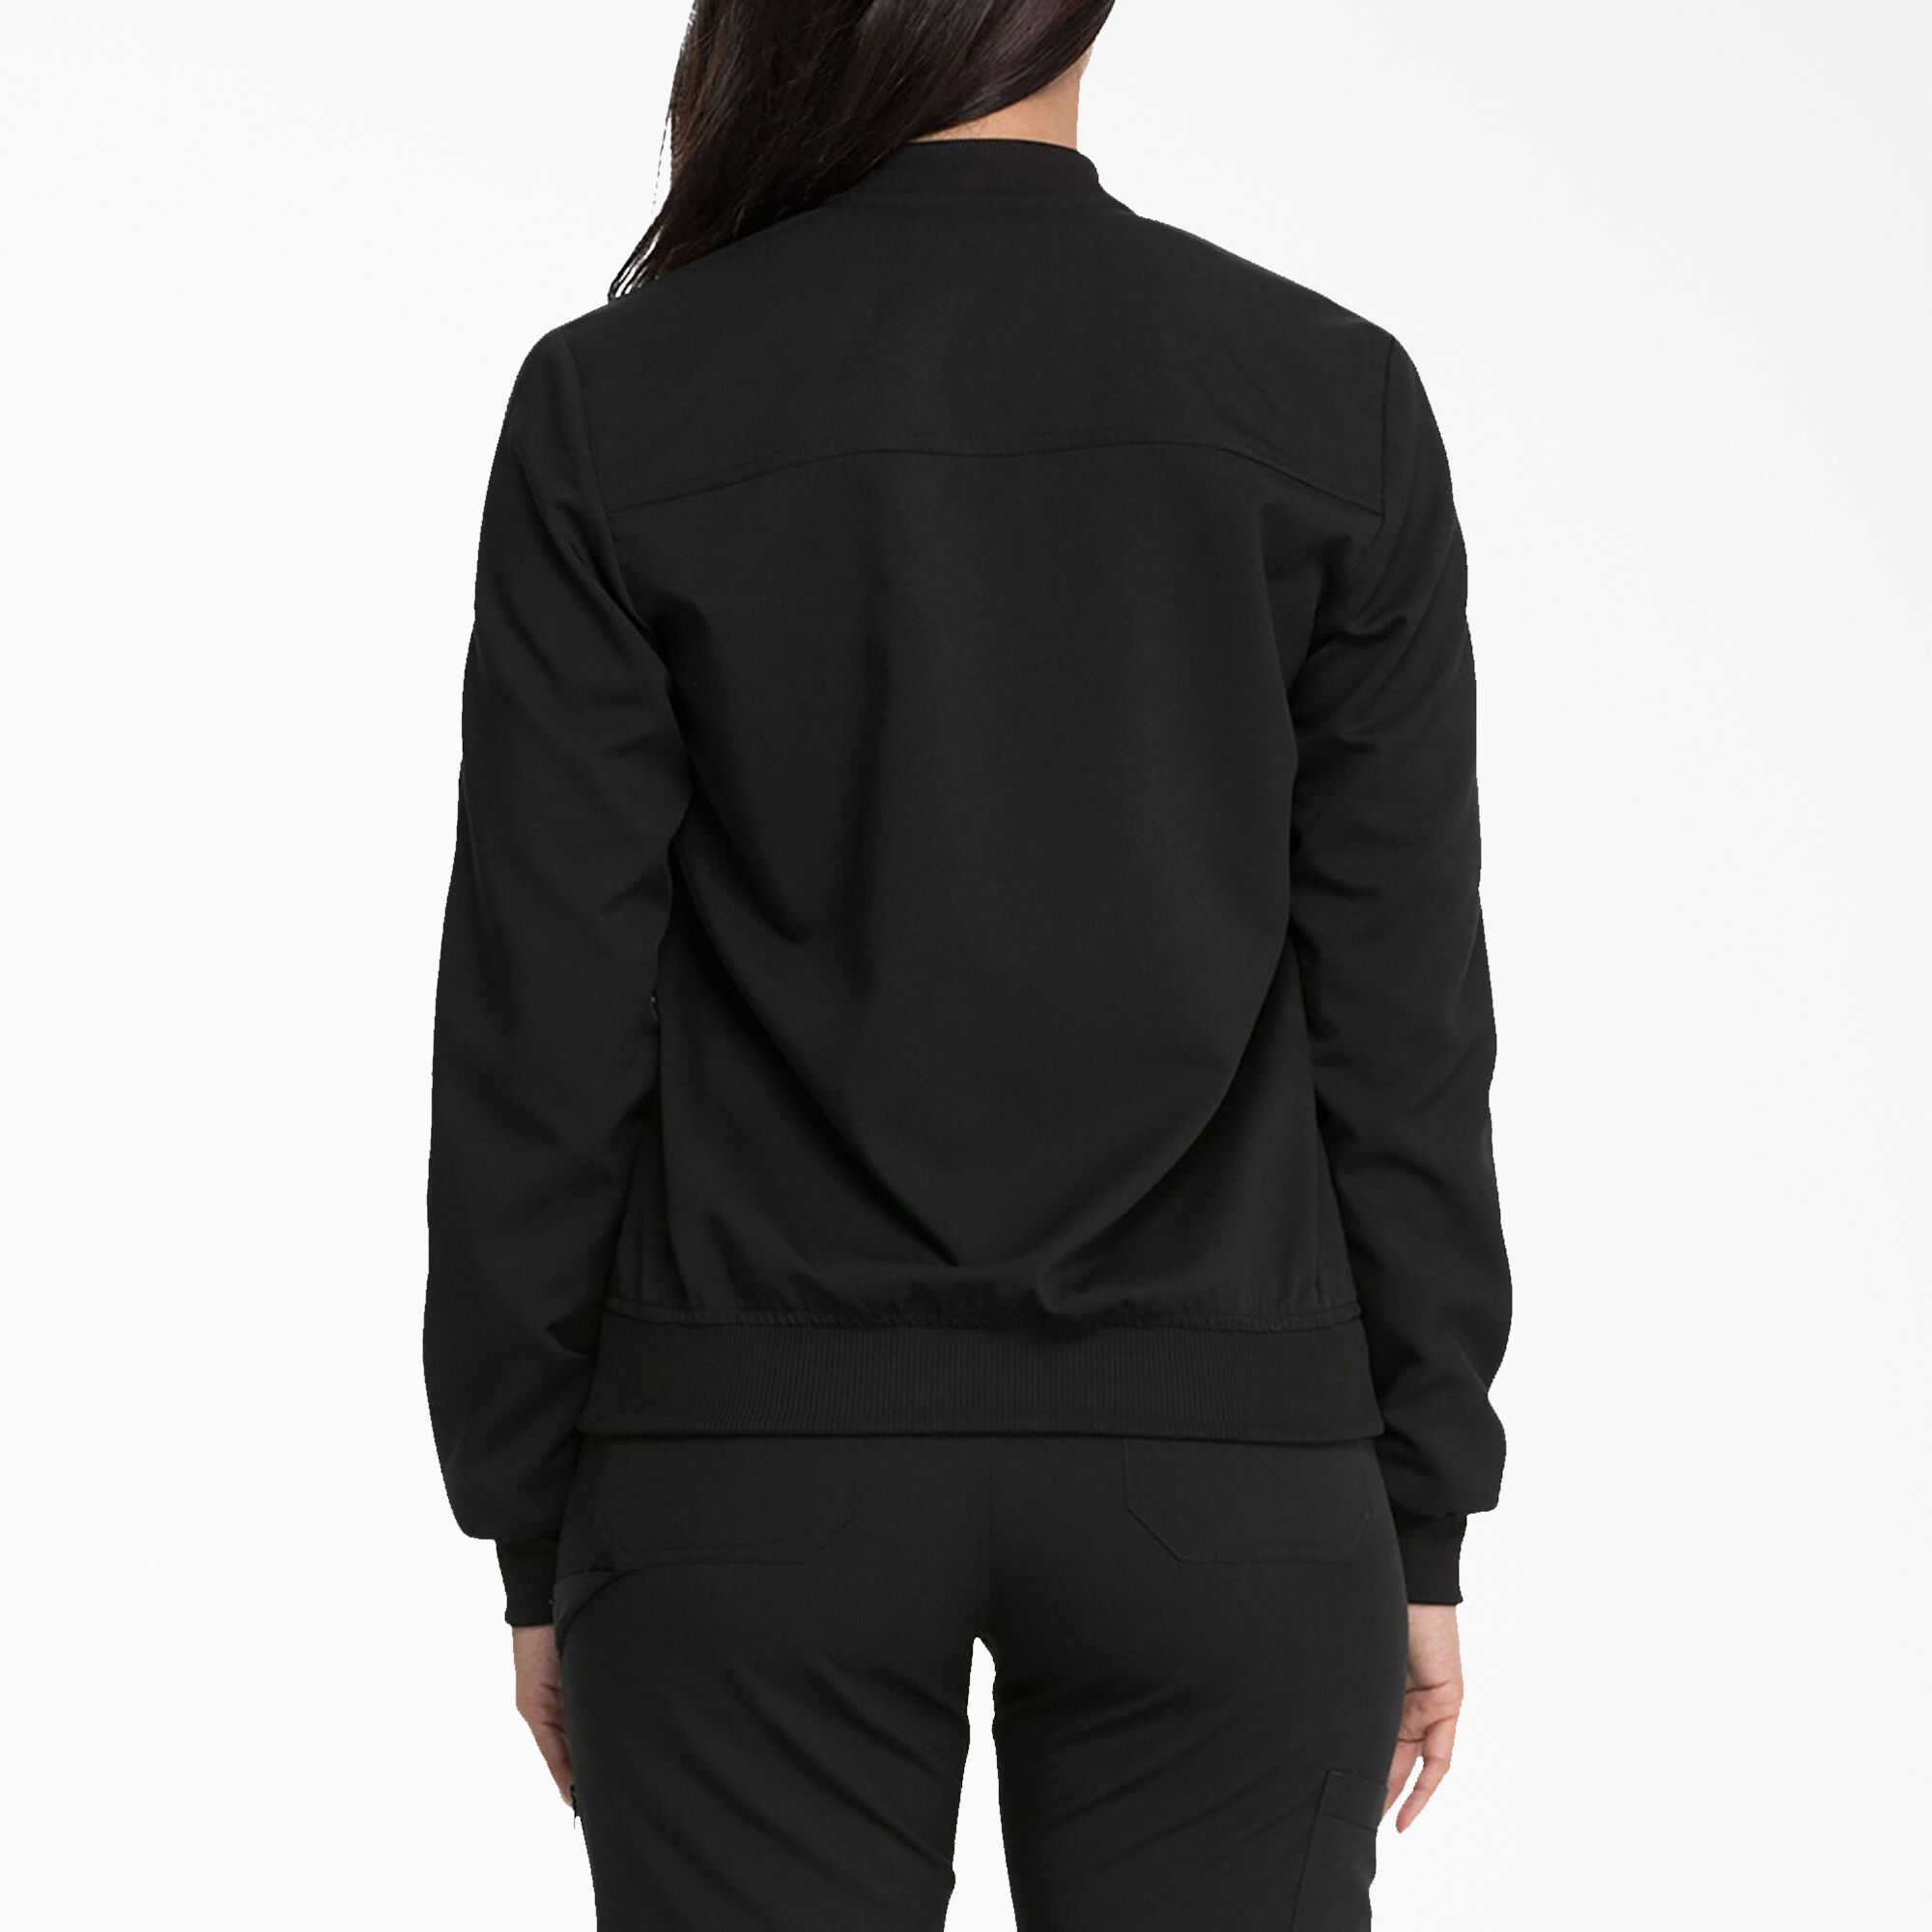 Women's Balance Zip Front Scrub Jacket - Dickies US